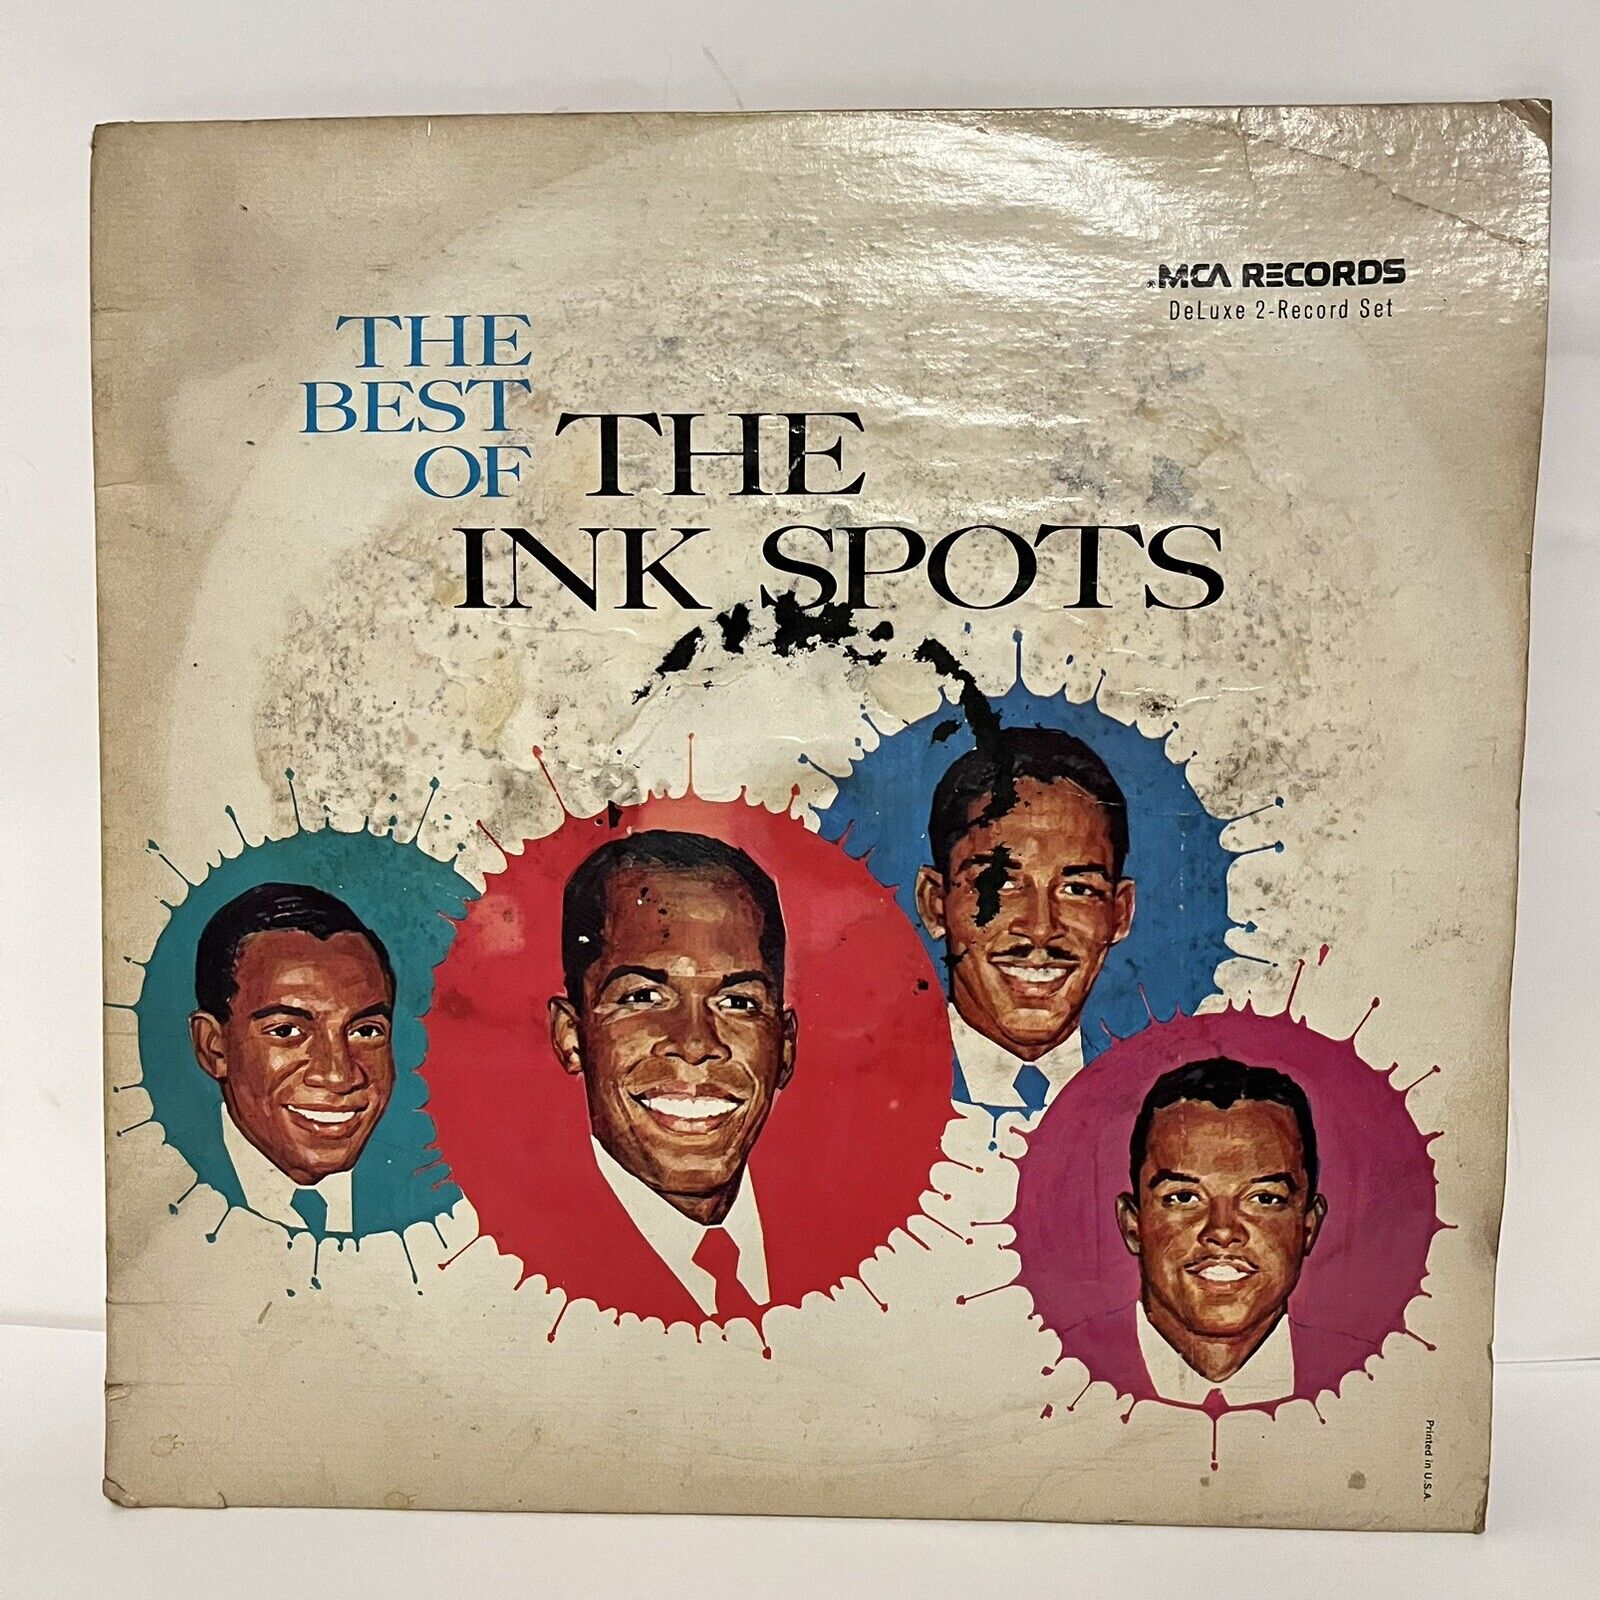 The Ink Spots -THE BEST OF THE INK SPOTS - MCA (2-4005) LP 33 Vinyl 2LPS VINTAGE